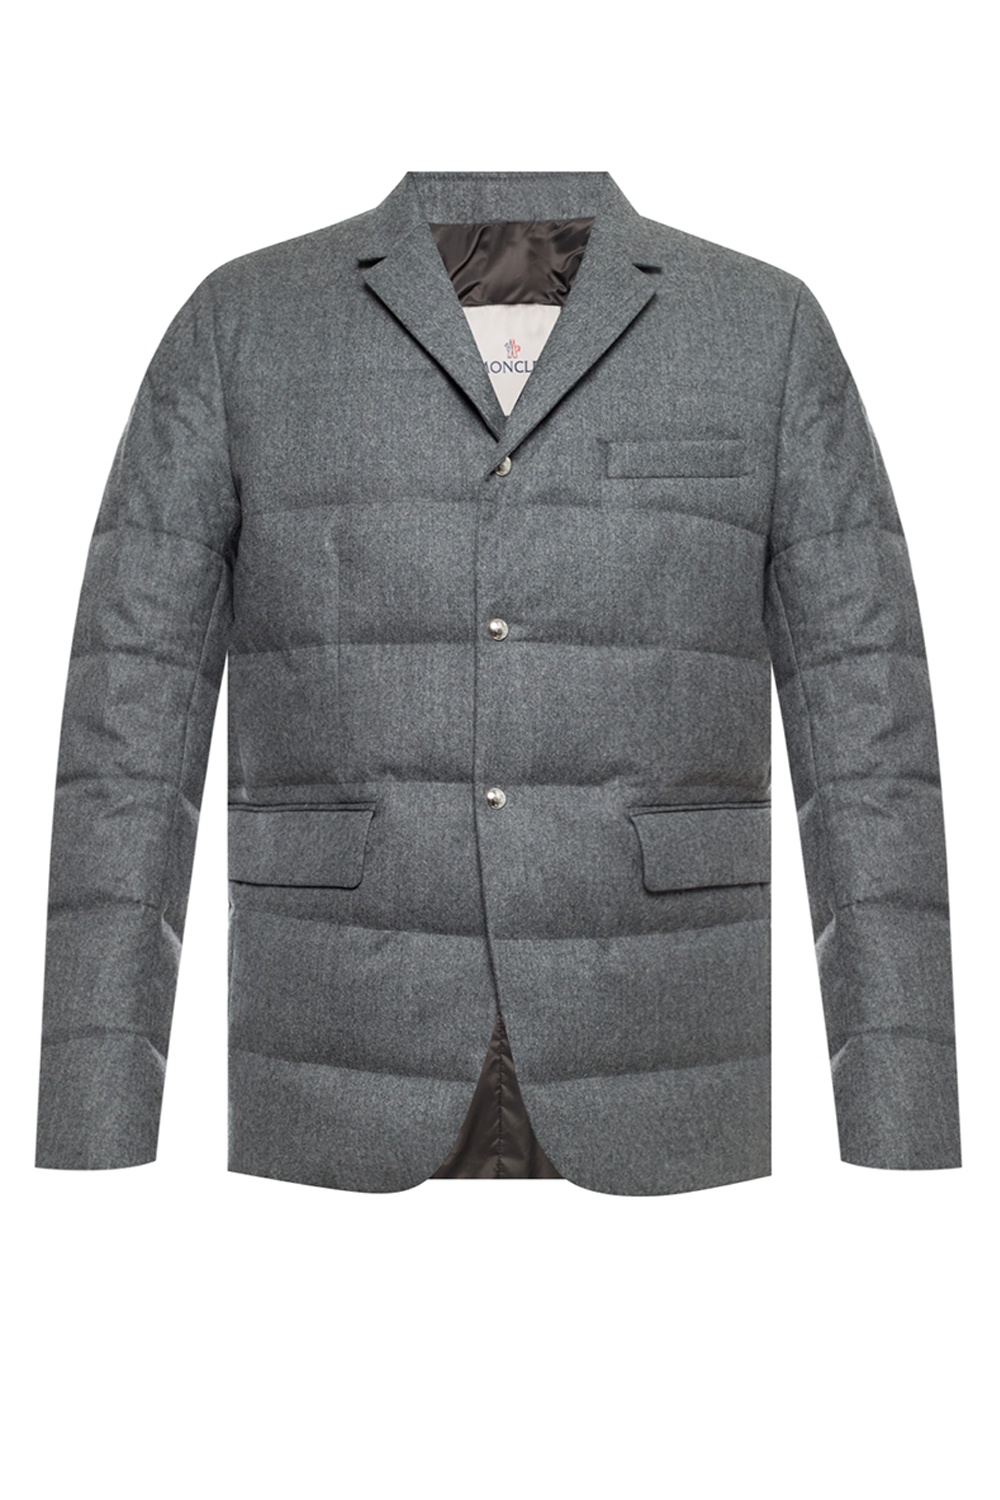 moncler blazer coat